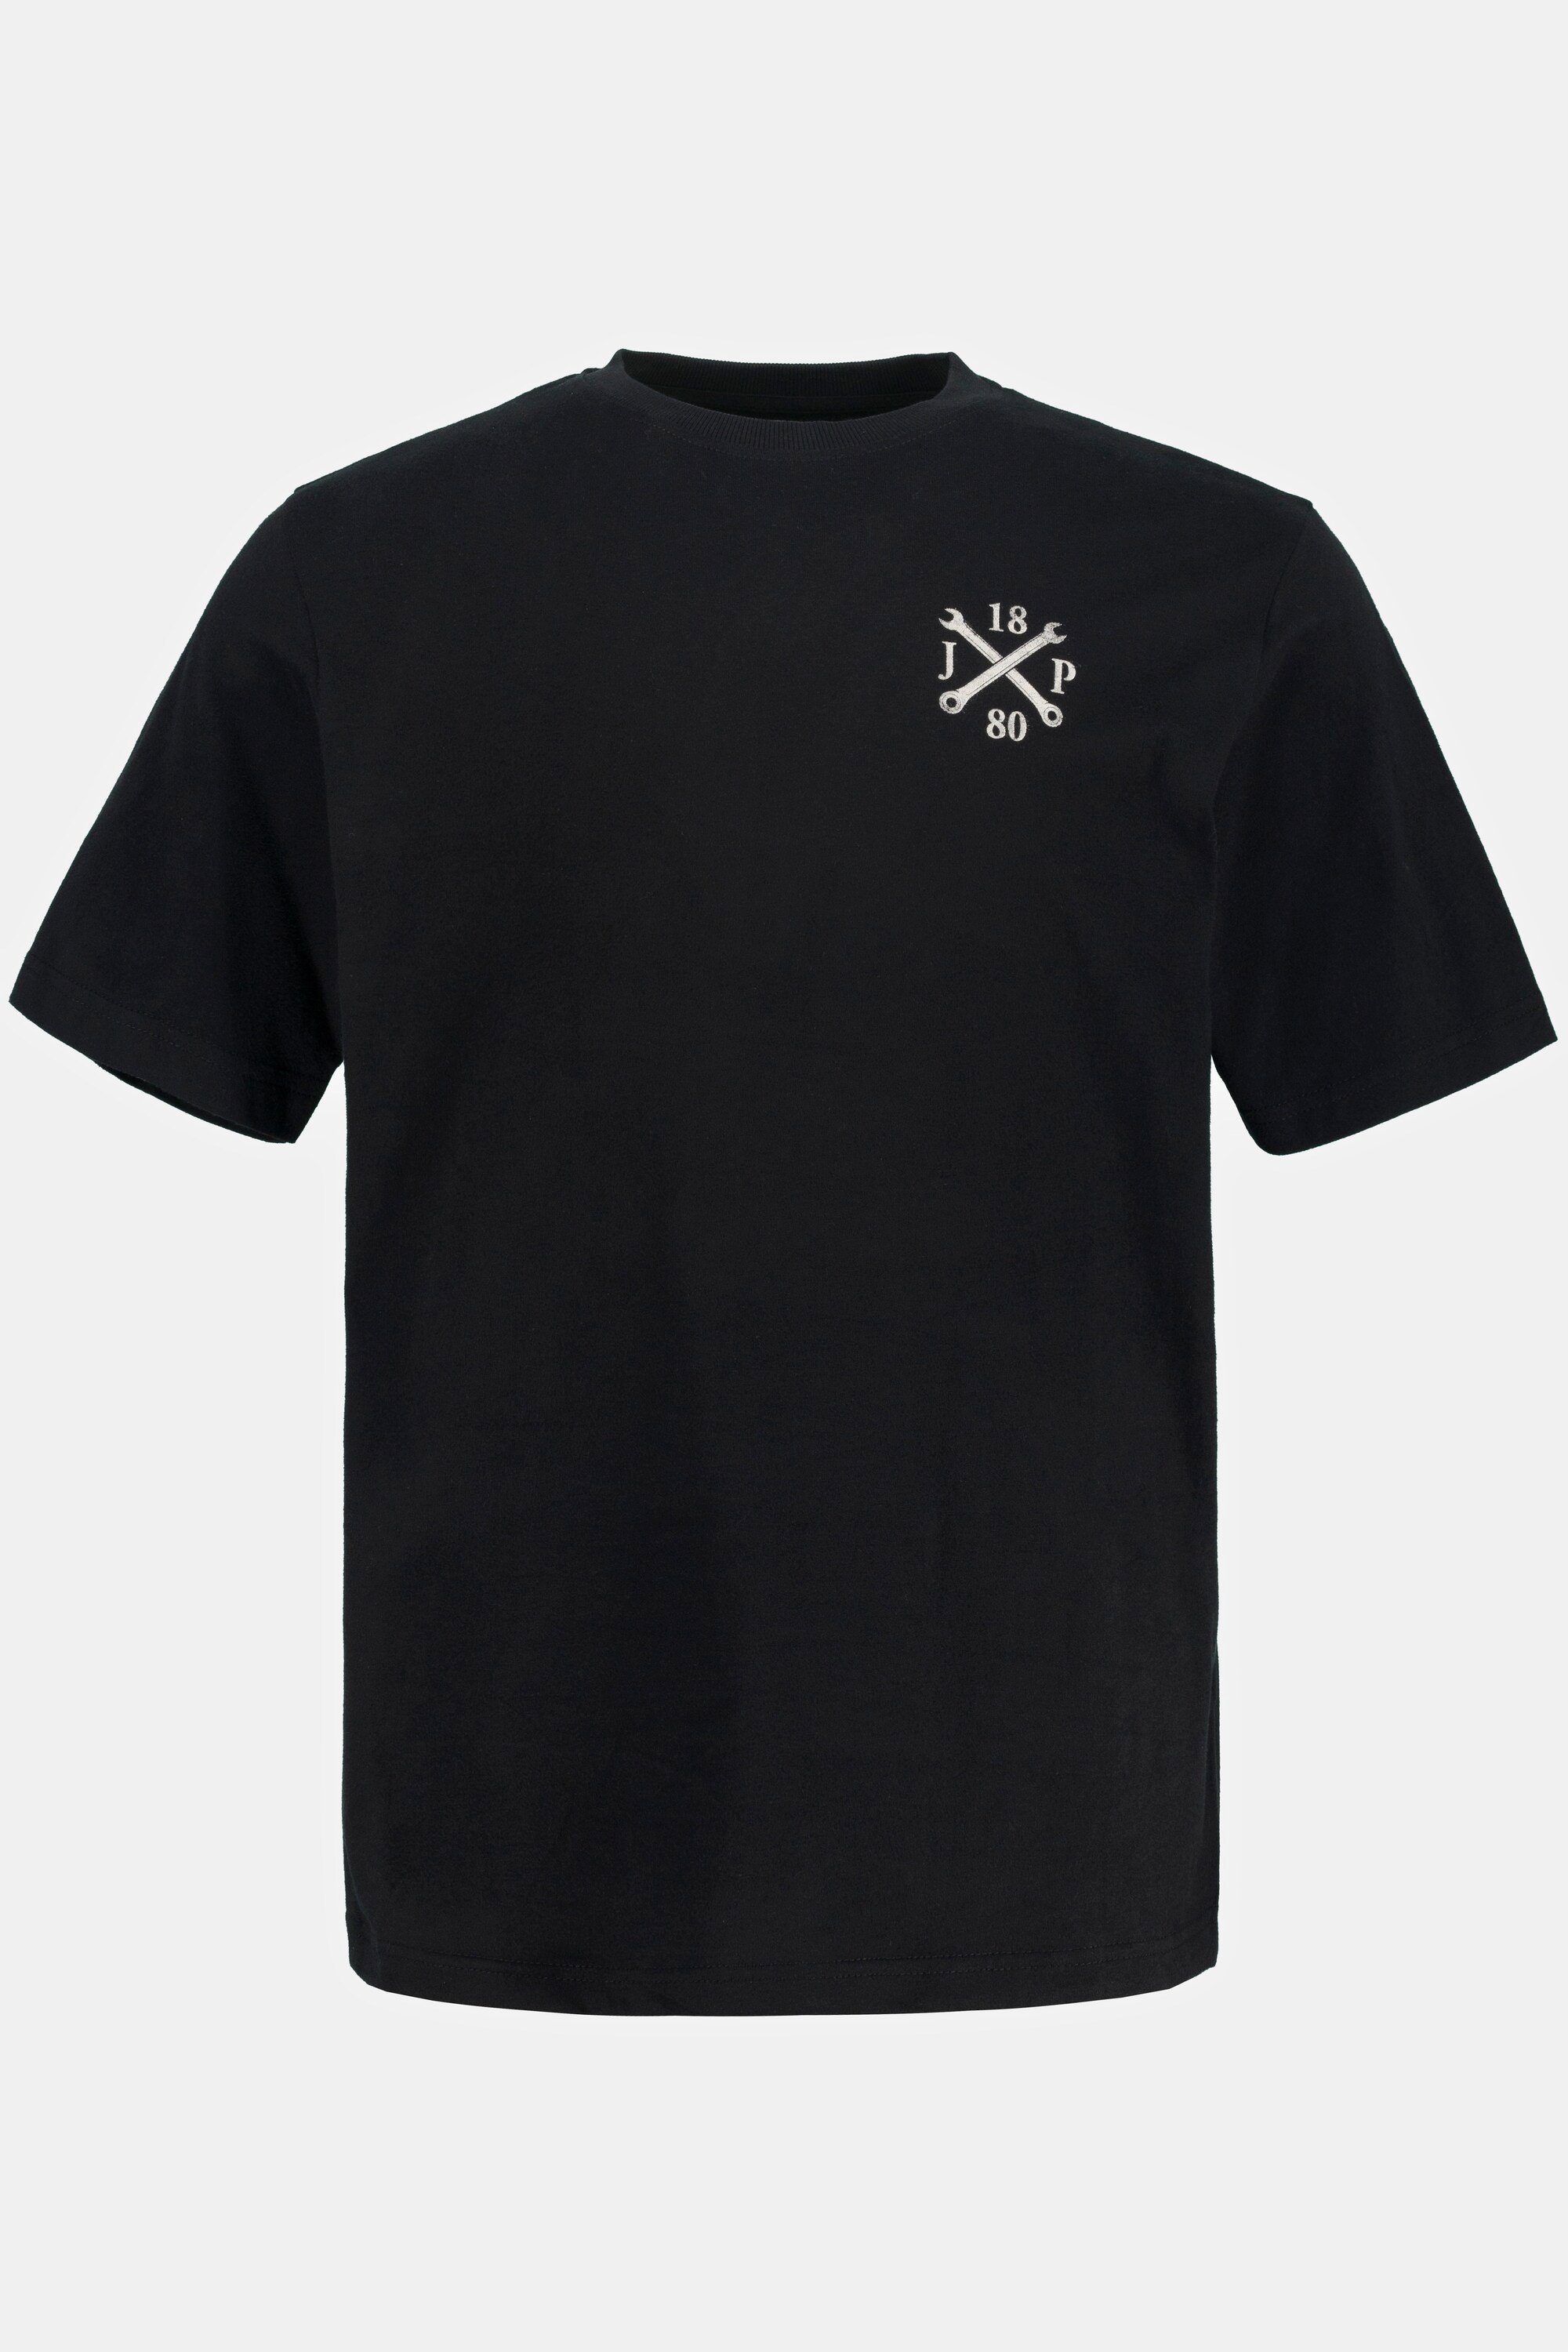 Halbarm JP1880 Print T-Shirt Rücken Rundhals T-Shirt